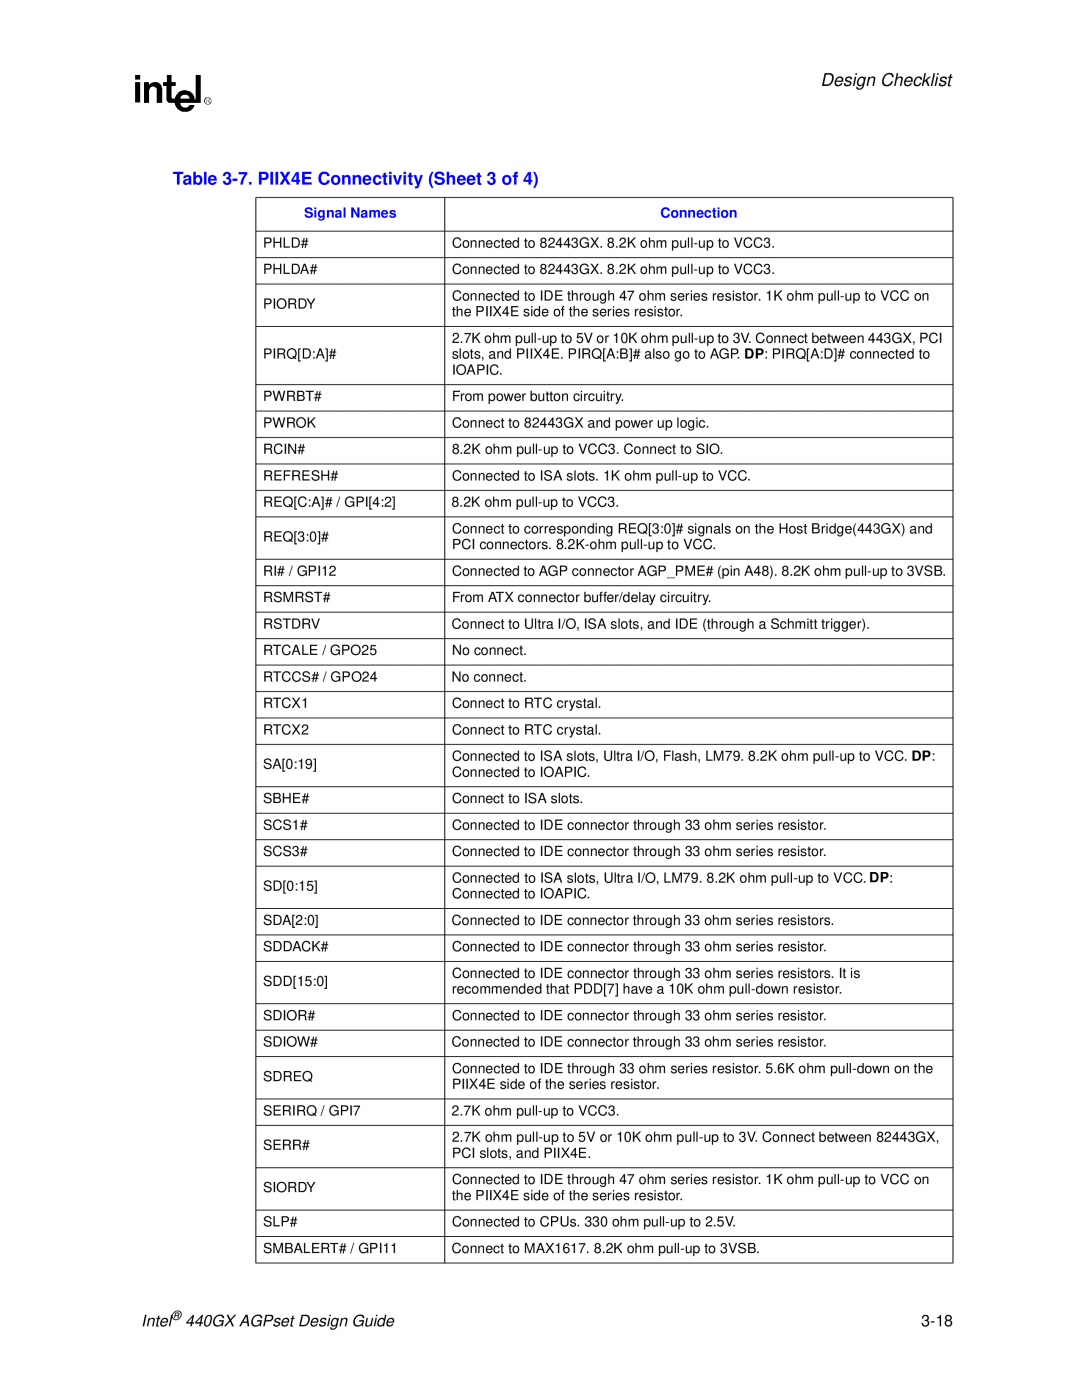 Intel manual 7. PIIX4E Connectivity Sheet 3 of, Design Checklist, Intel440GX AGPset Design Guide, 3-18 